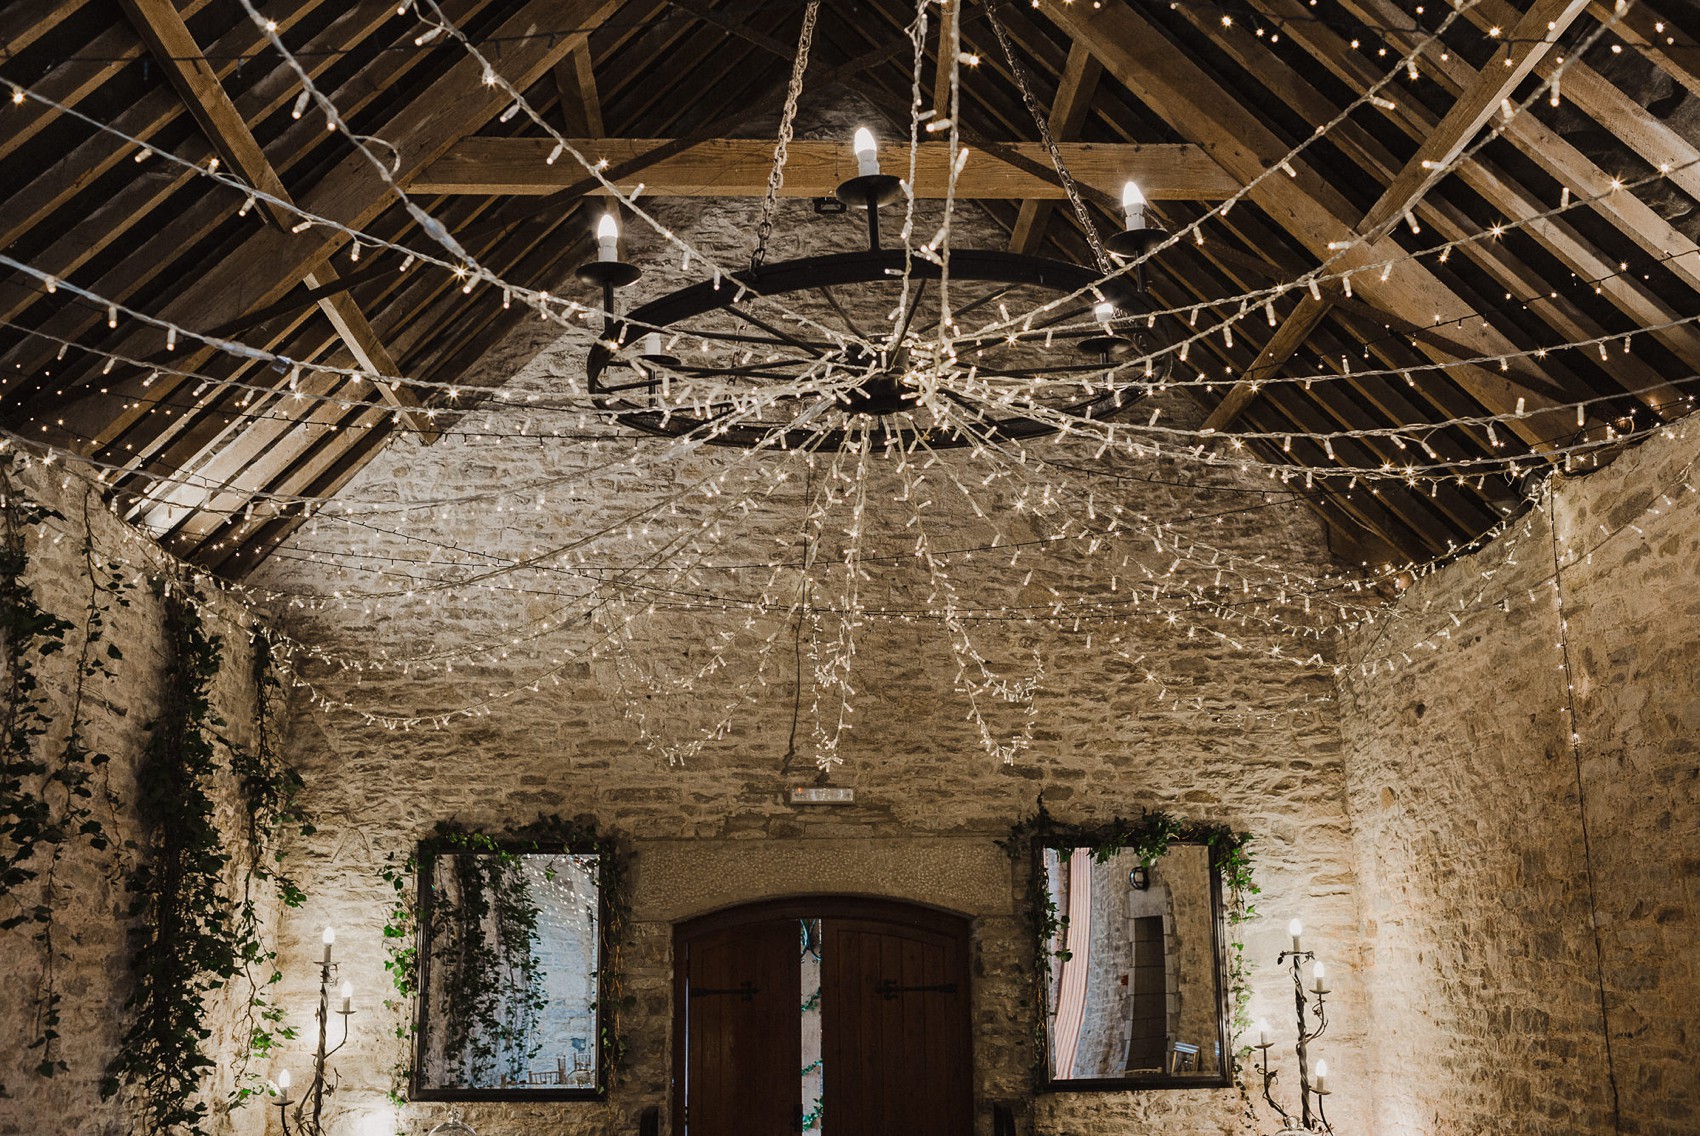  Romantic winter barn wedding - An Italian Inspired Winter Barn Wedding in Dorset, in Shades of Green and White